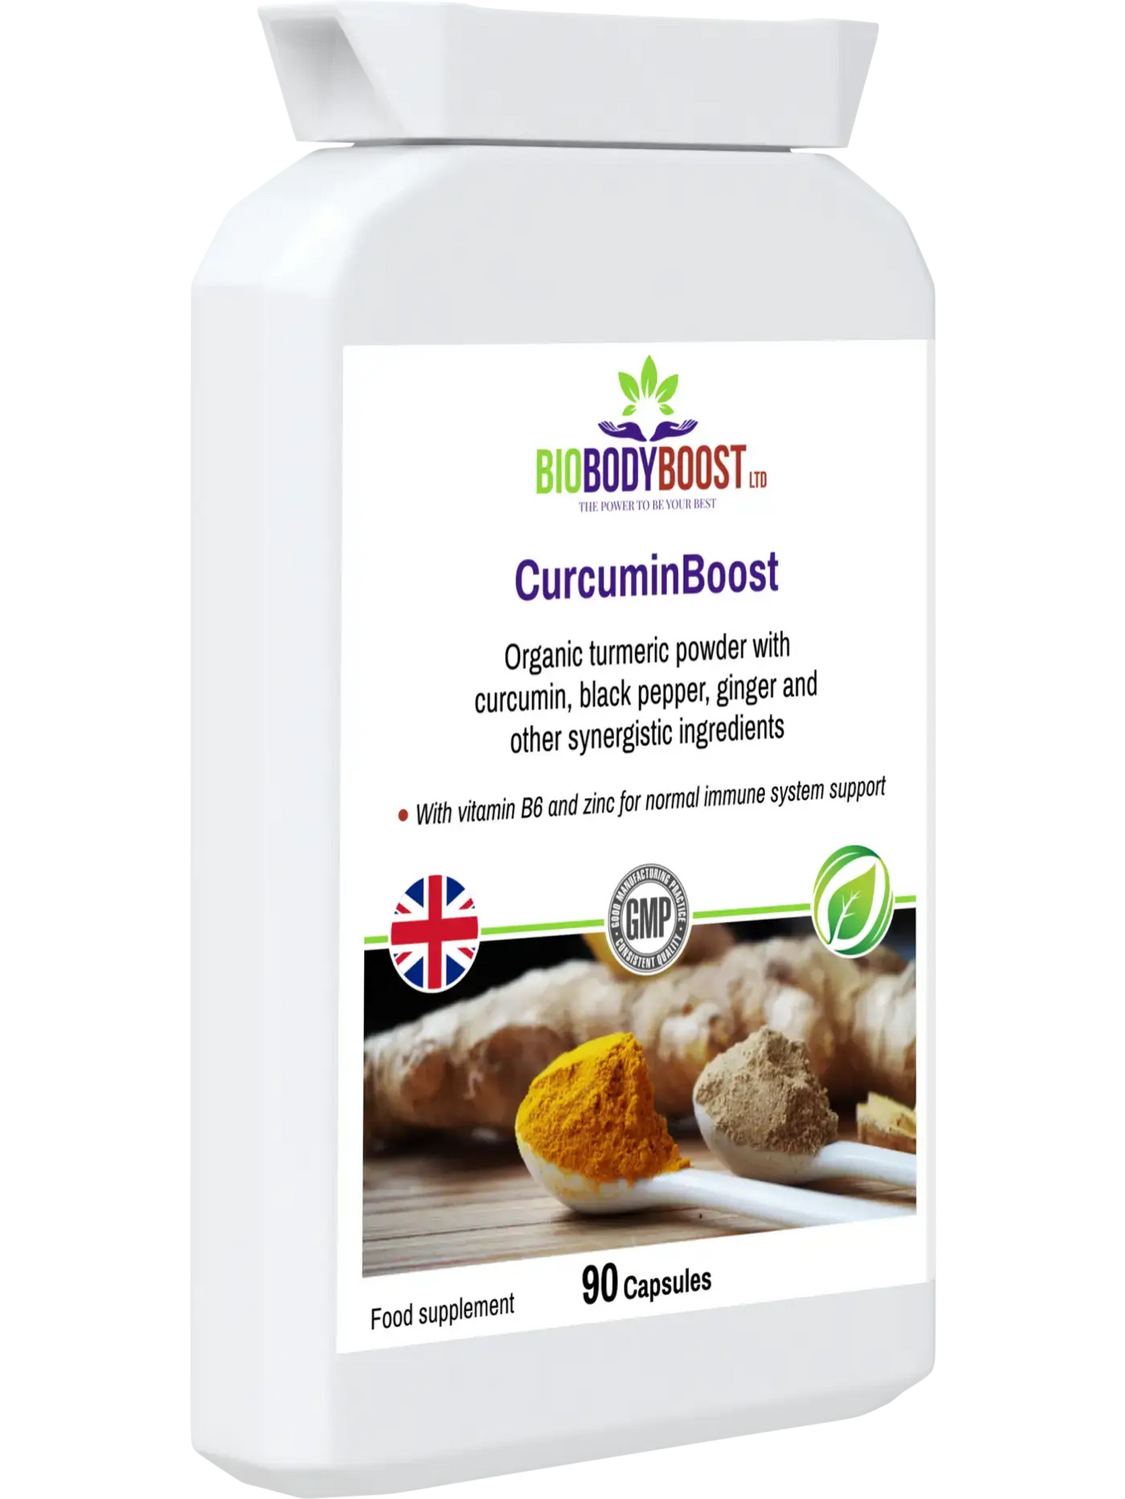 CurcuminBoost - Turmeric Herbal Combination Vitamins & Supplements powder